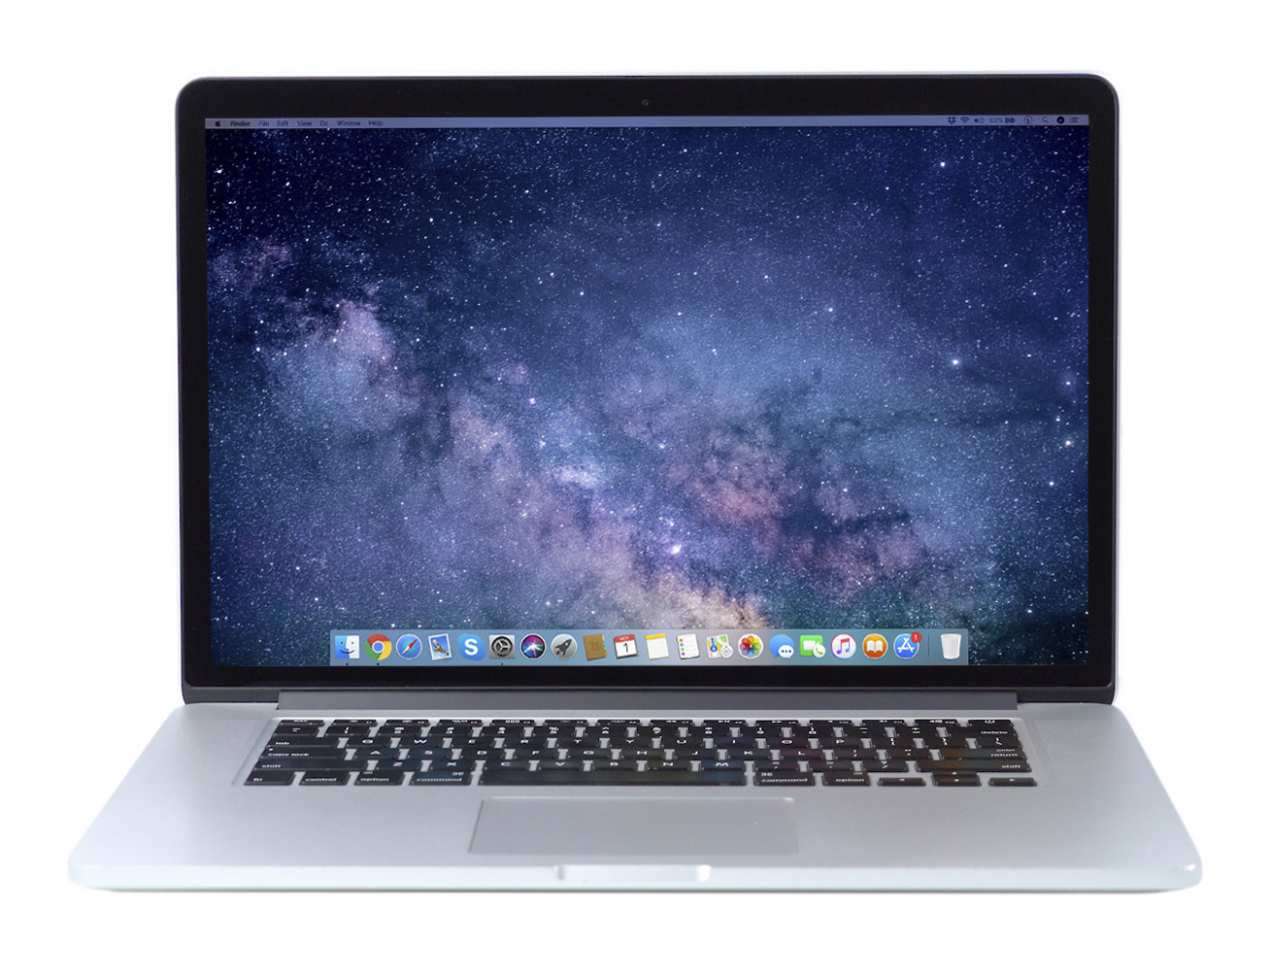 Apple MacBook Pro 15-inch (Mid 2015) 2.8GHz Quad Core i7 16 GB RAM Dual GPU MJLU2LL/A A1398